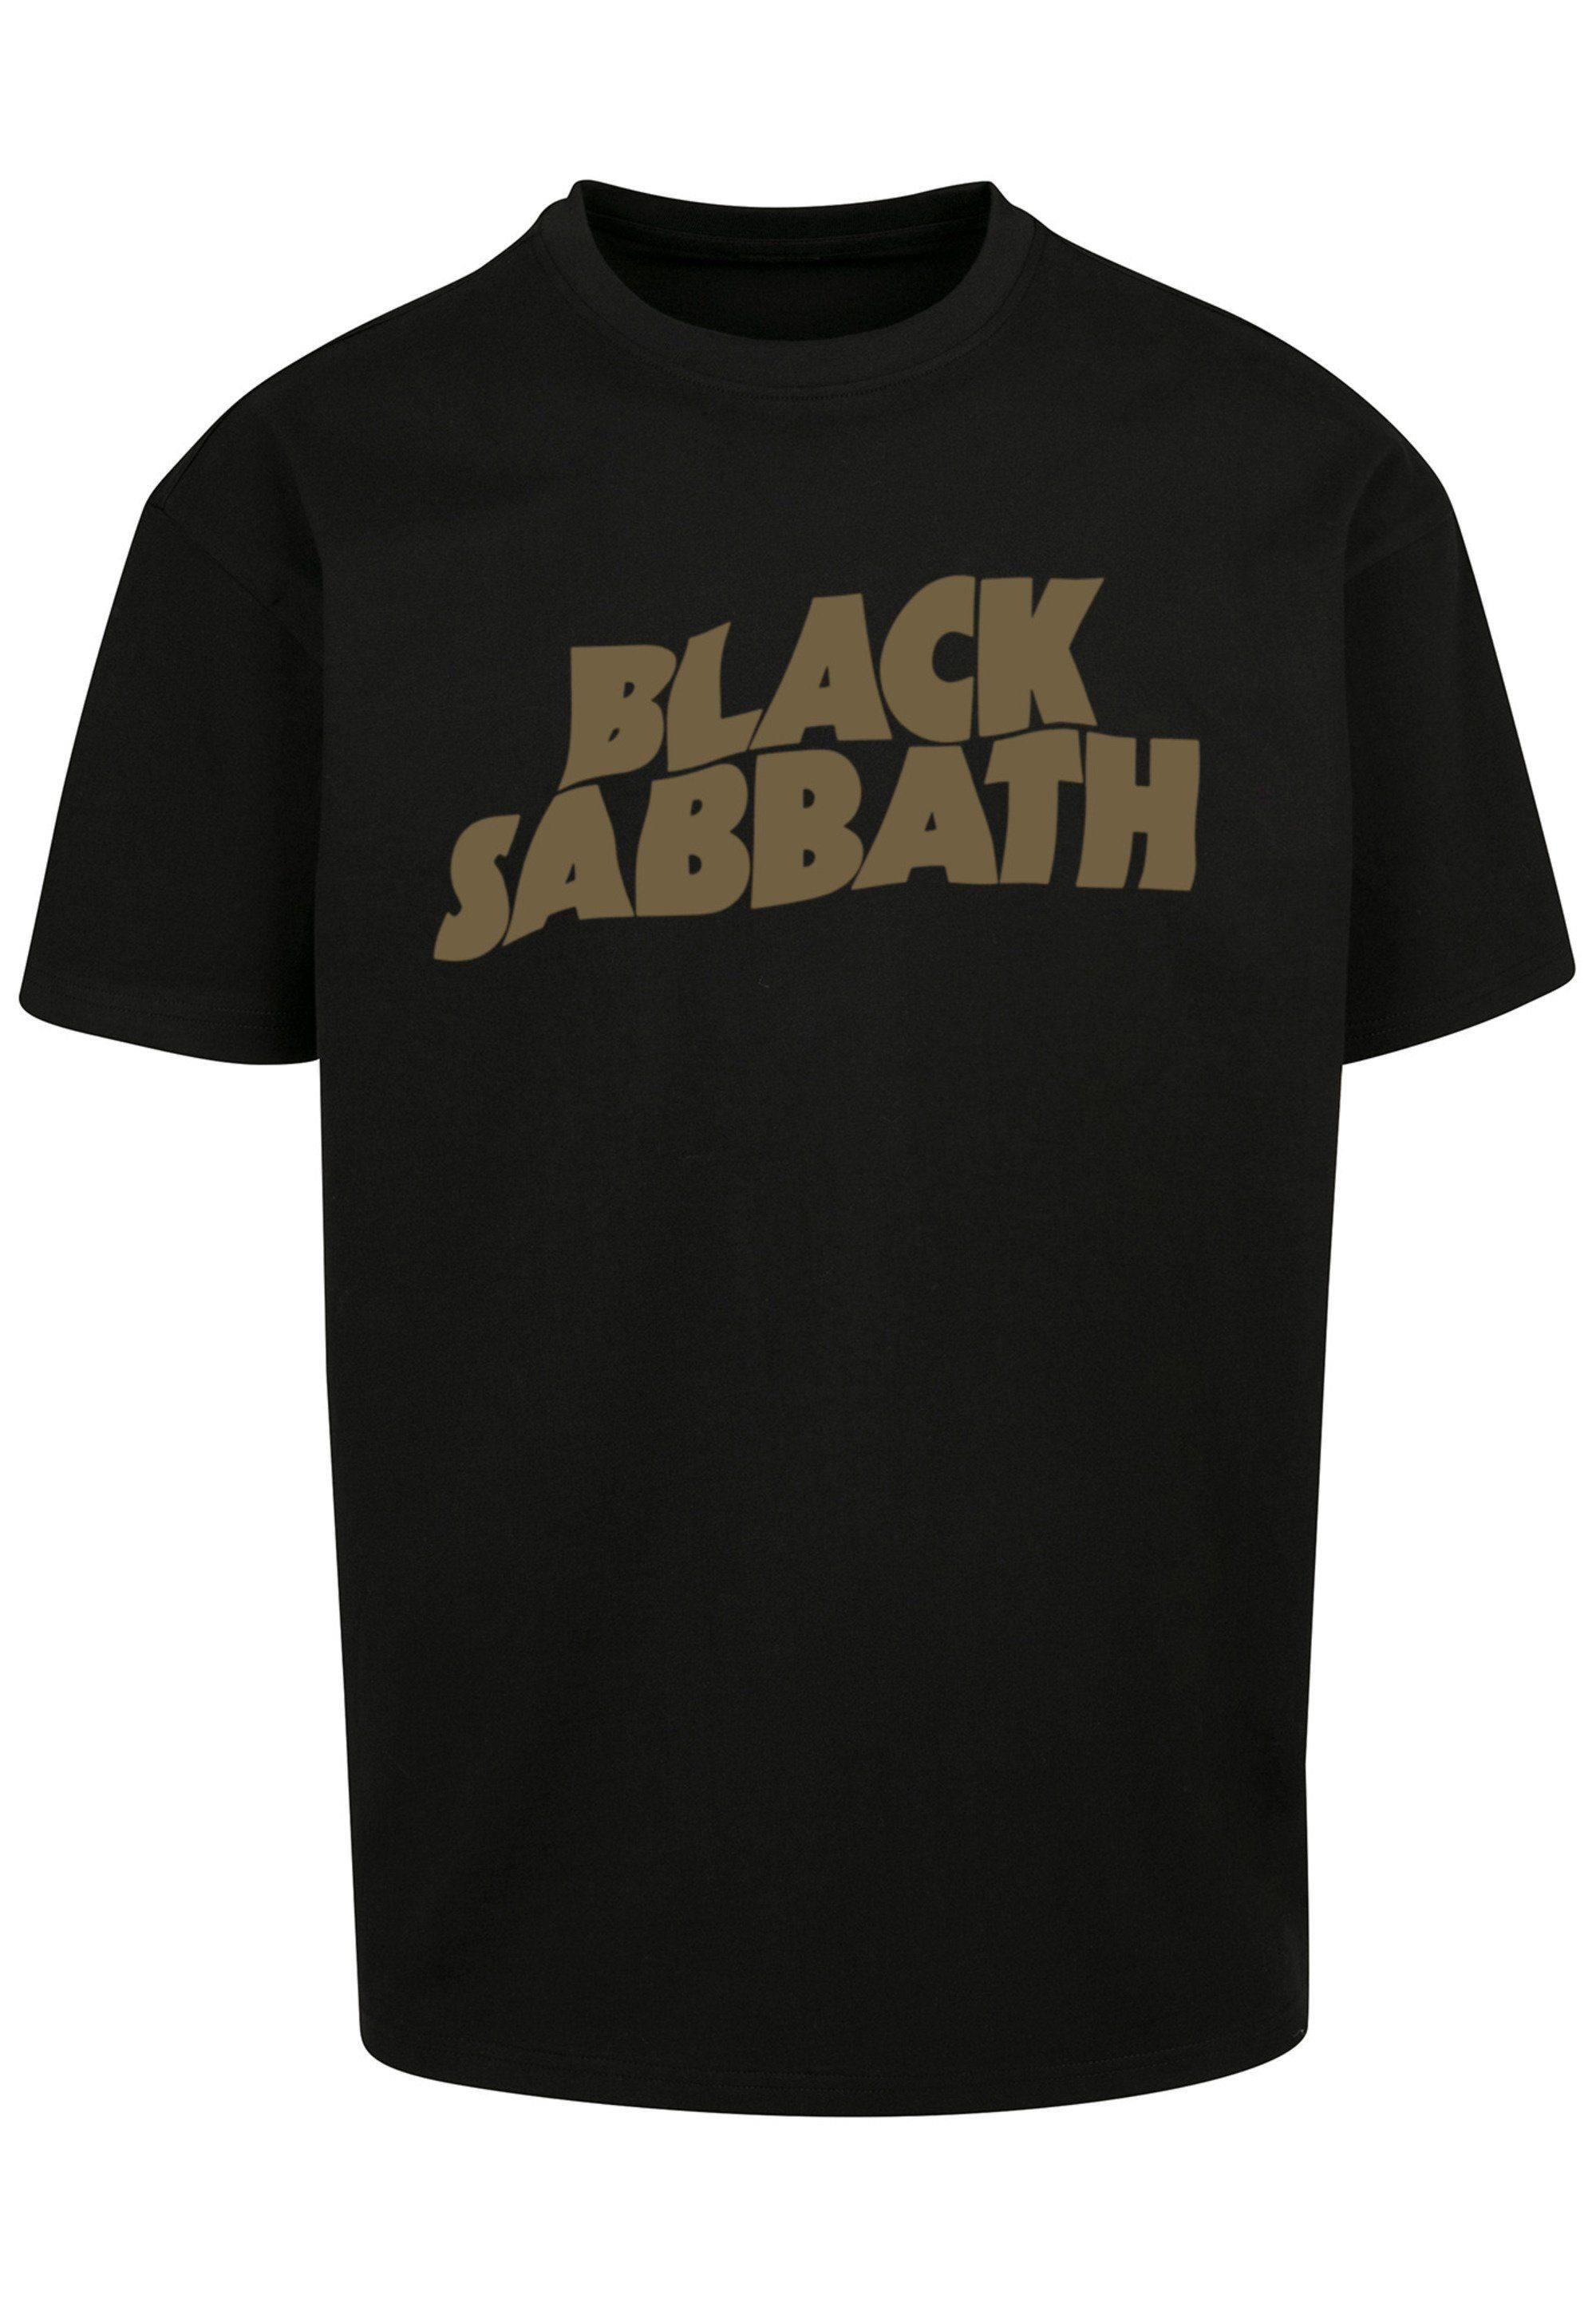 T-Shirt Print Black Sabbath Metal 1978 Zip Band Tour US F4NT4STIC Black